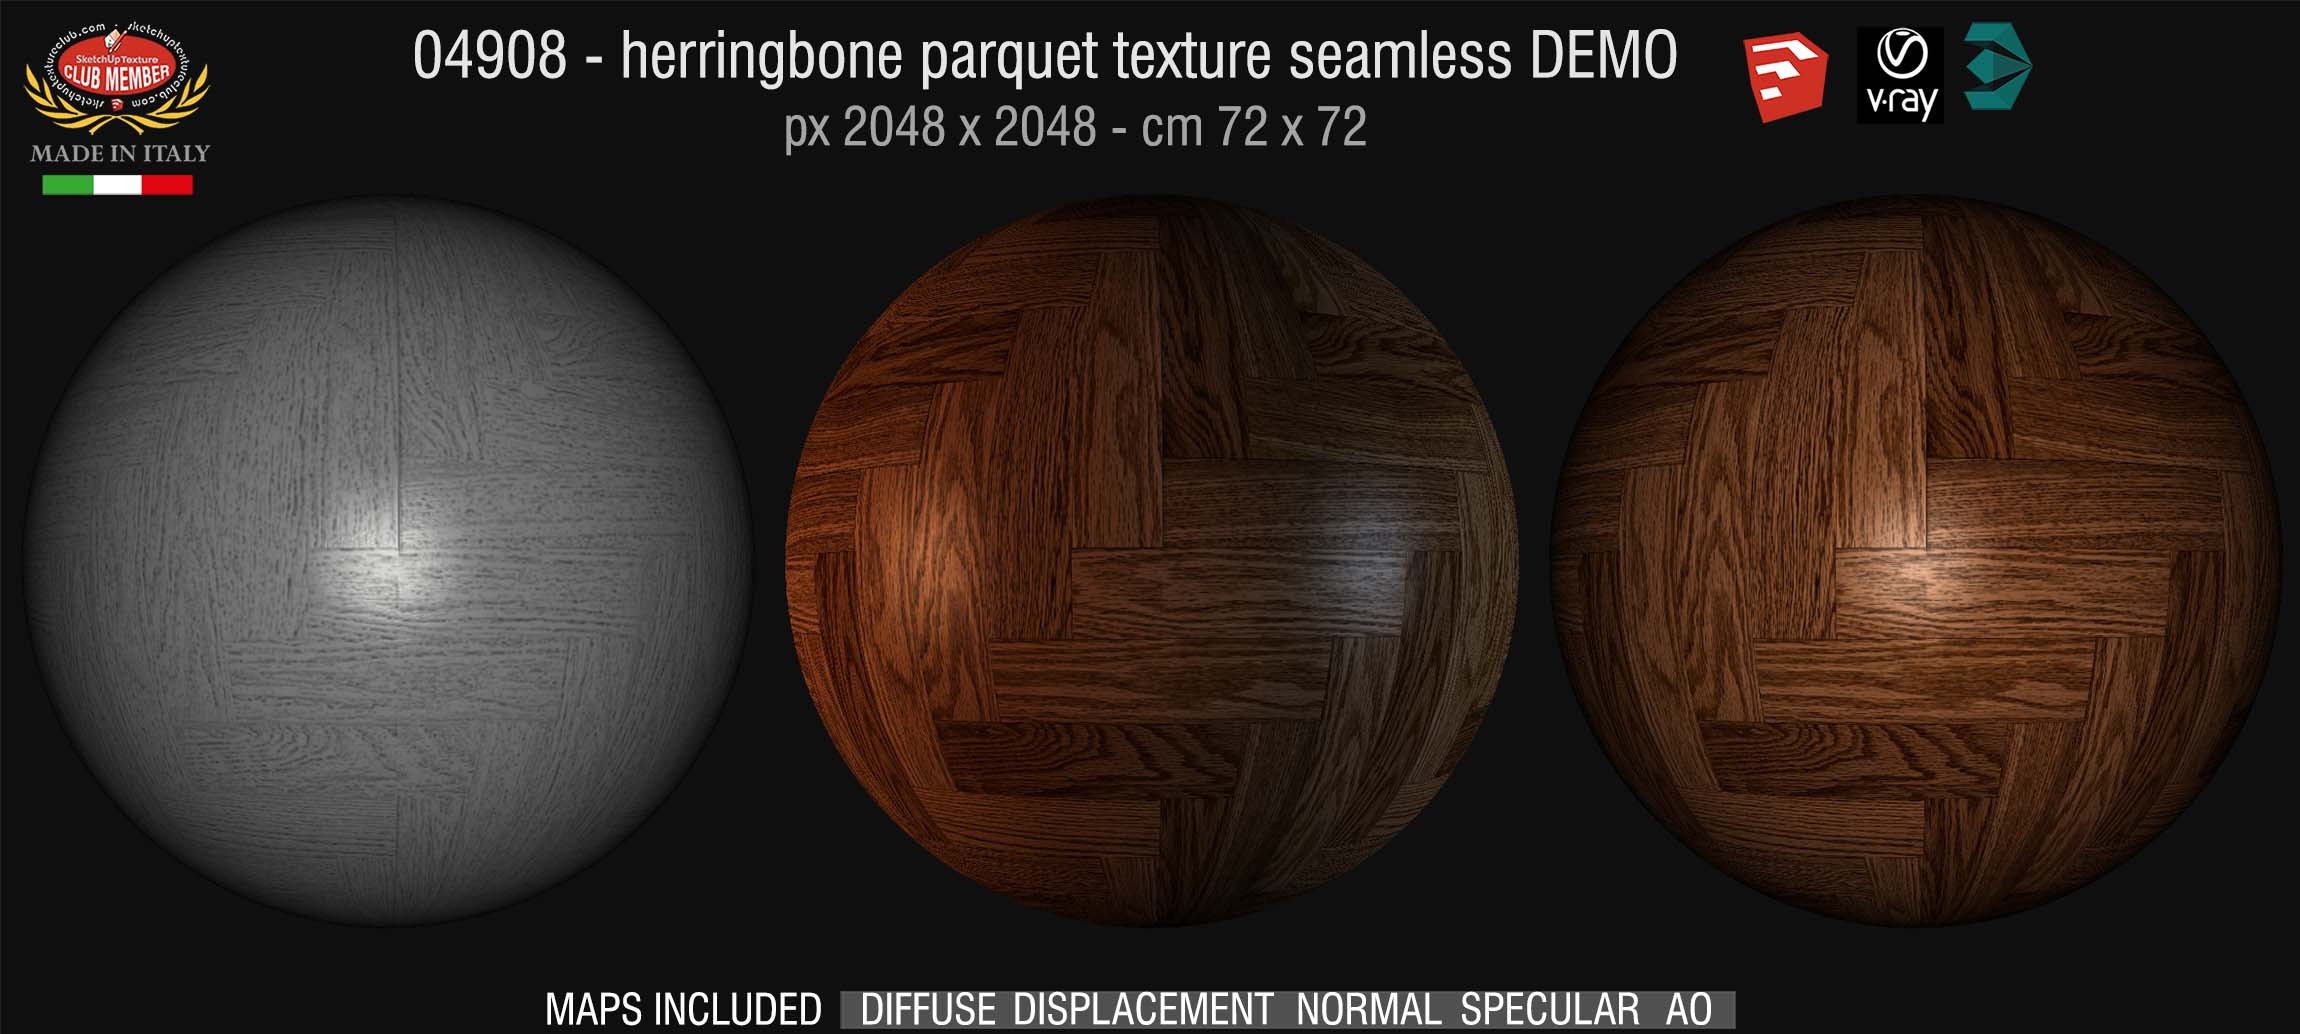 04908 HR Herringbone parquet texture seamless + maps DEMO